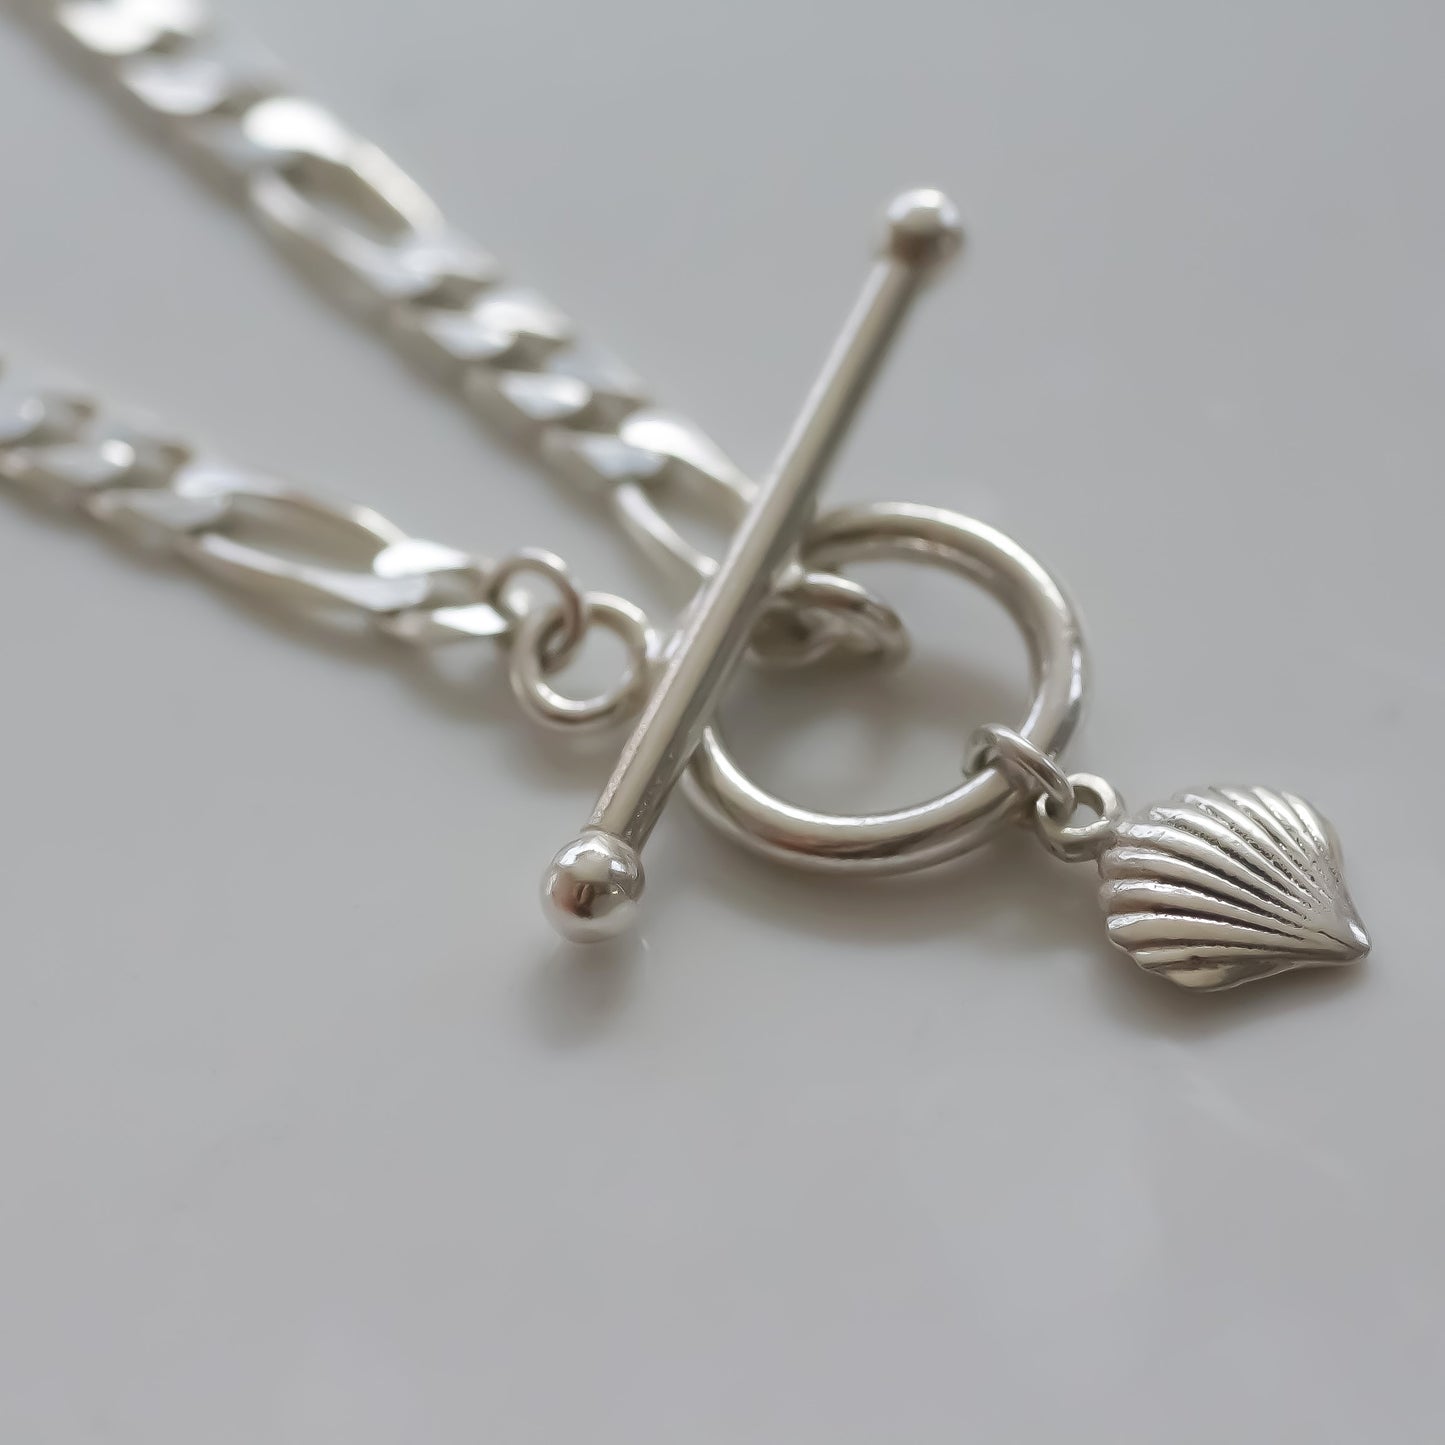 Seashell charm necklace